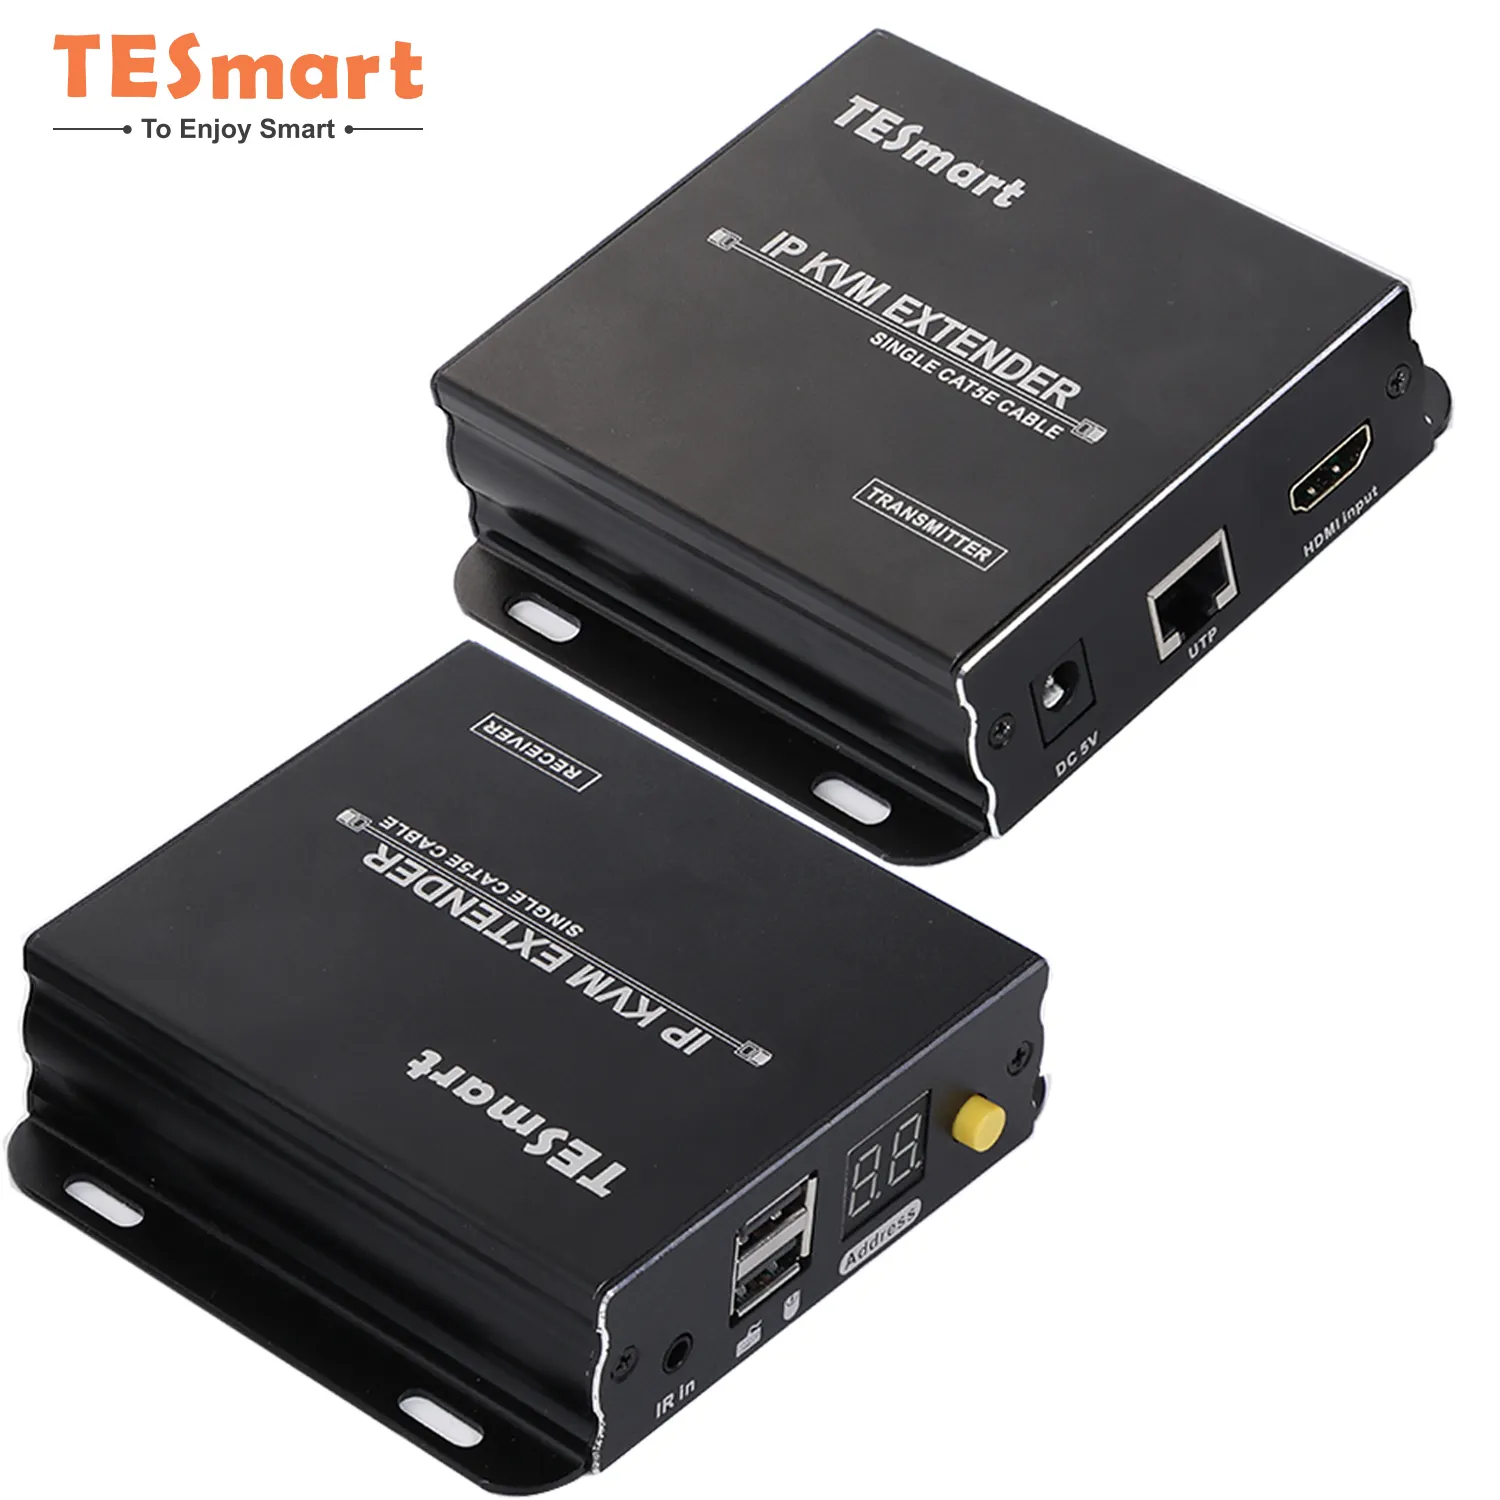 TESmart Gute Qualität UTP/FTP 120m HDMI Extender 120M Tx Rx HDMI IR HDMI Audio Video KVM Extender Für XBOX DVD PS3